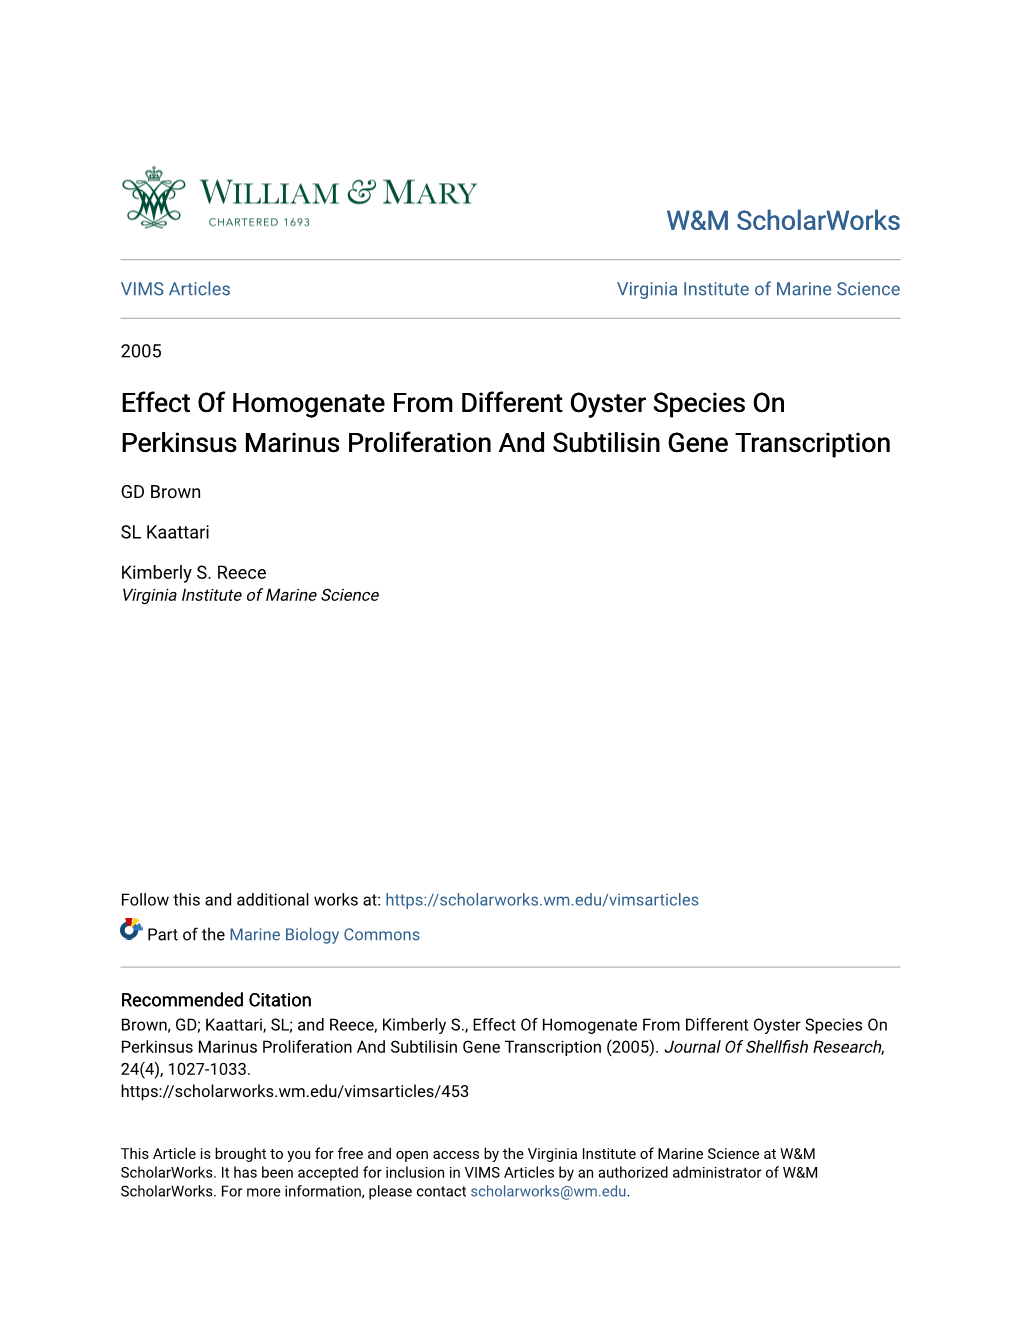 Effect of Homogenate from Different Oyster Species on Perkinsus Marinus Proliferation and Subtilisin Gene Transcription